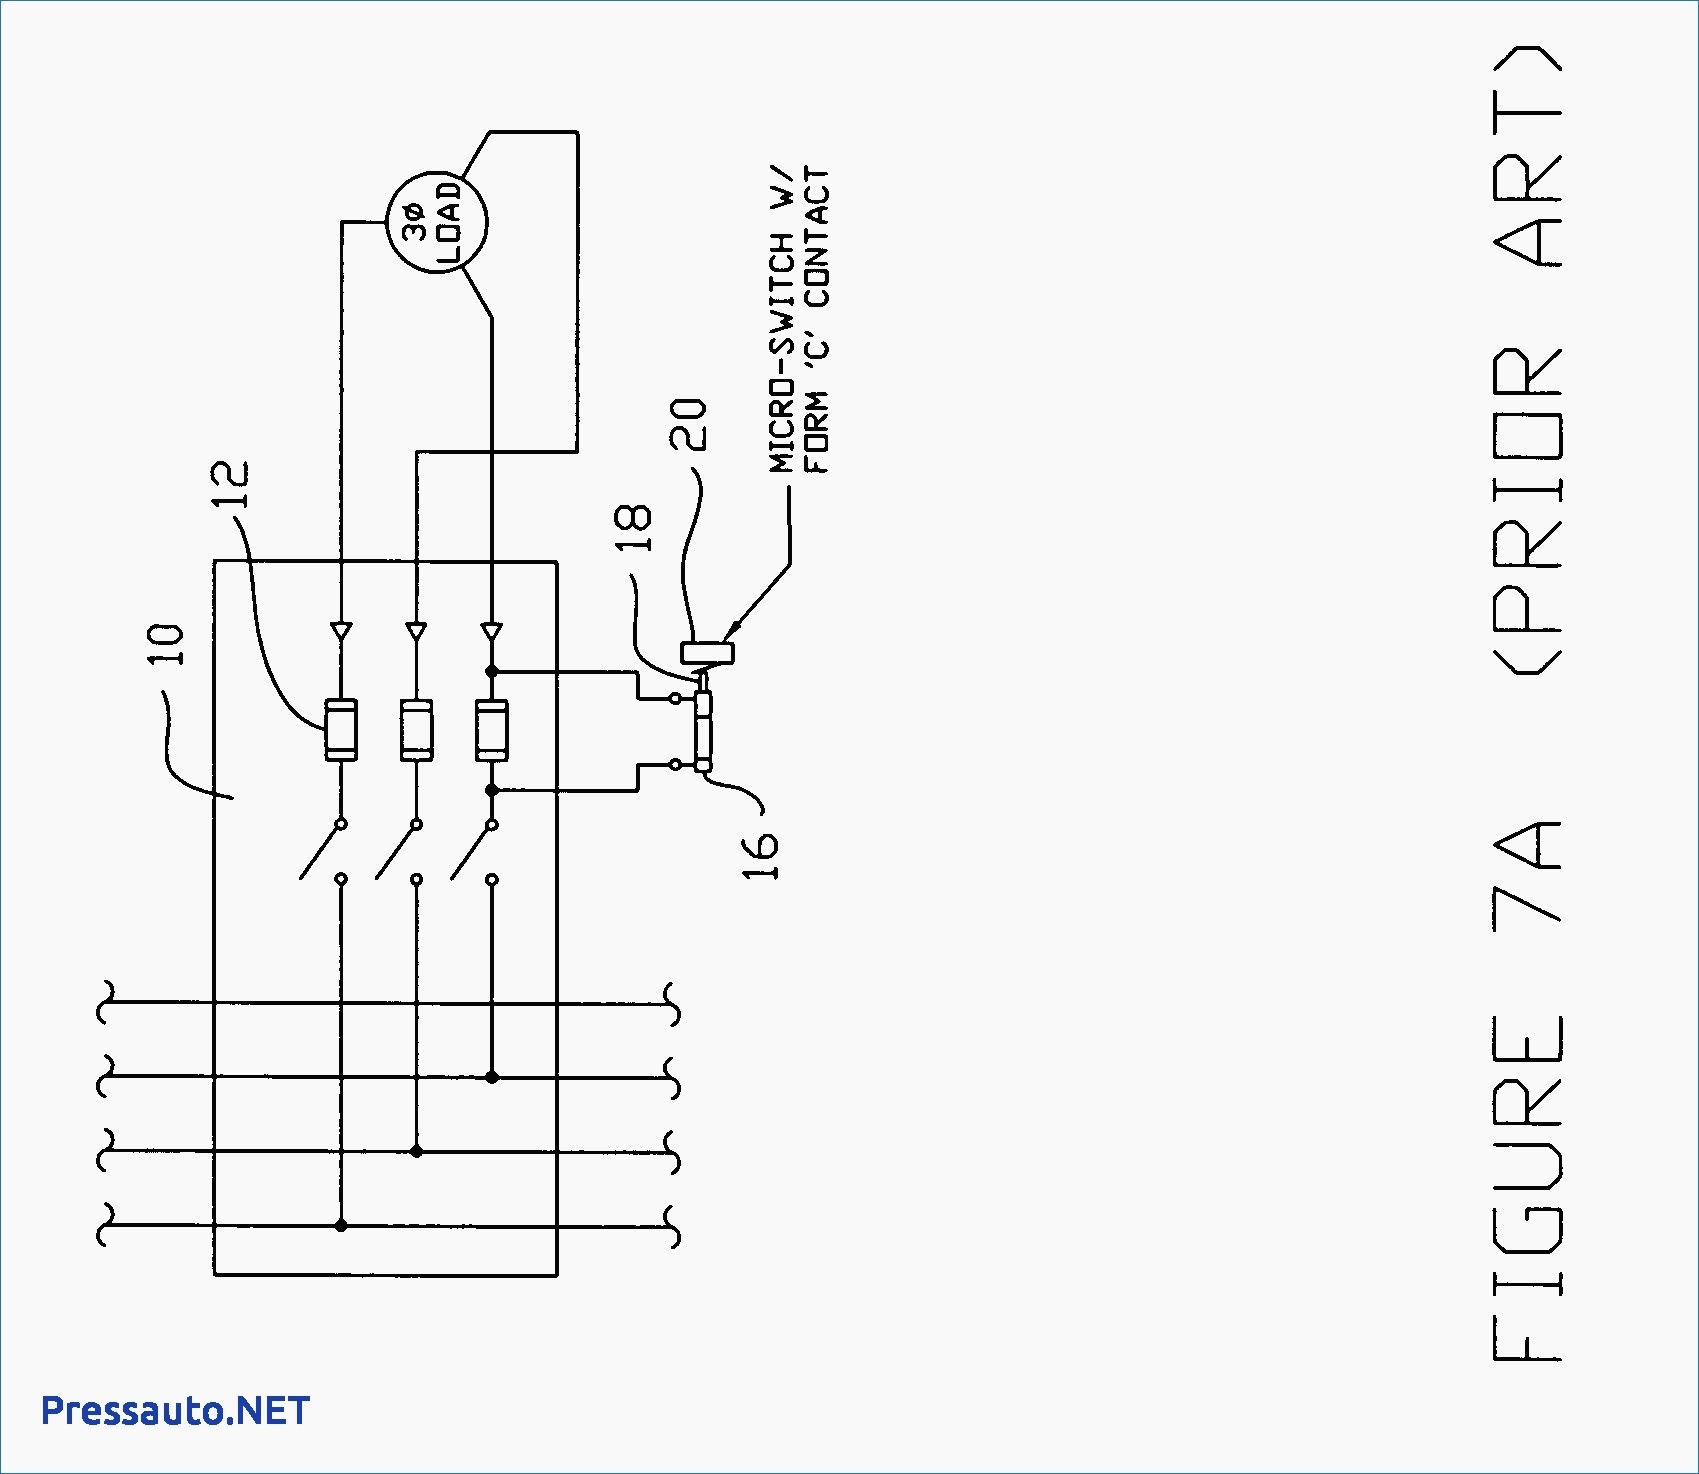 Physical Wiring Diagram Of Universal Circuit Breaker 1